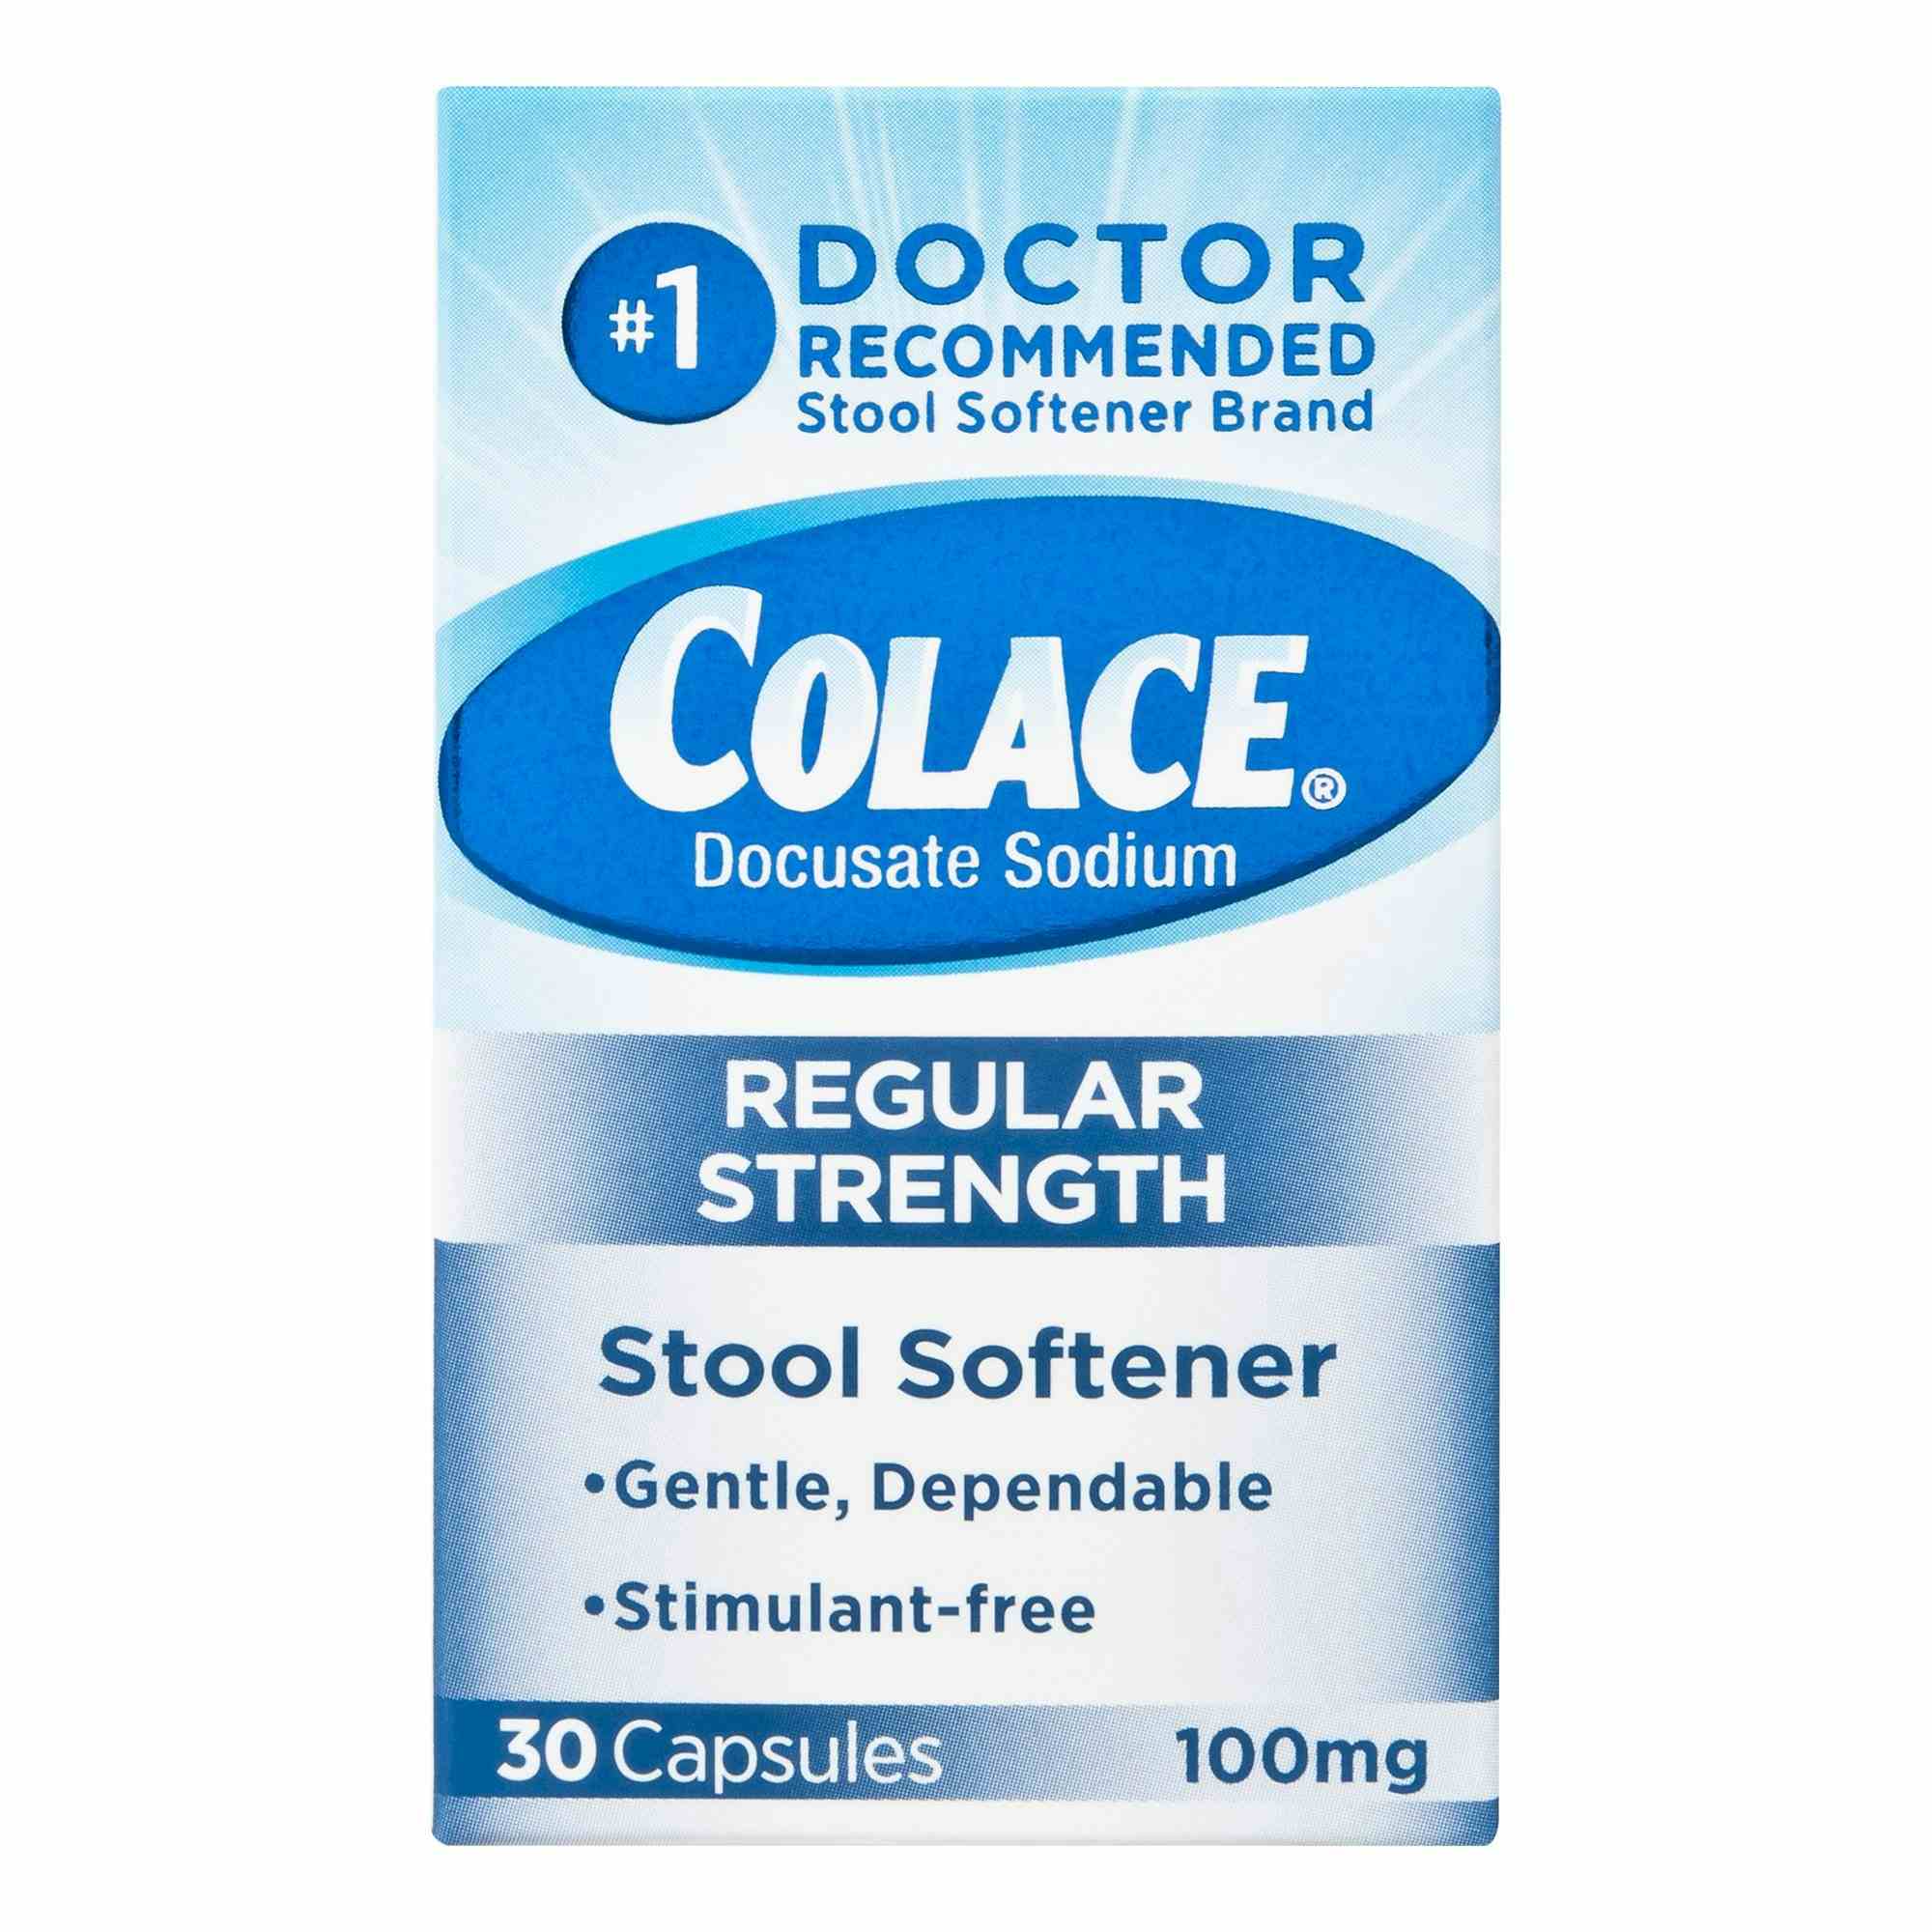 Colace Docusate Sodium Regular Strength Stool Softener